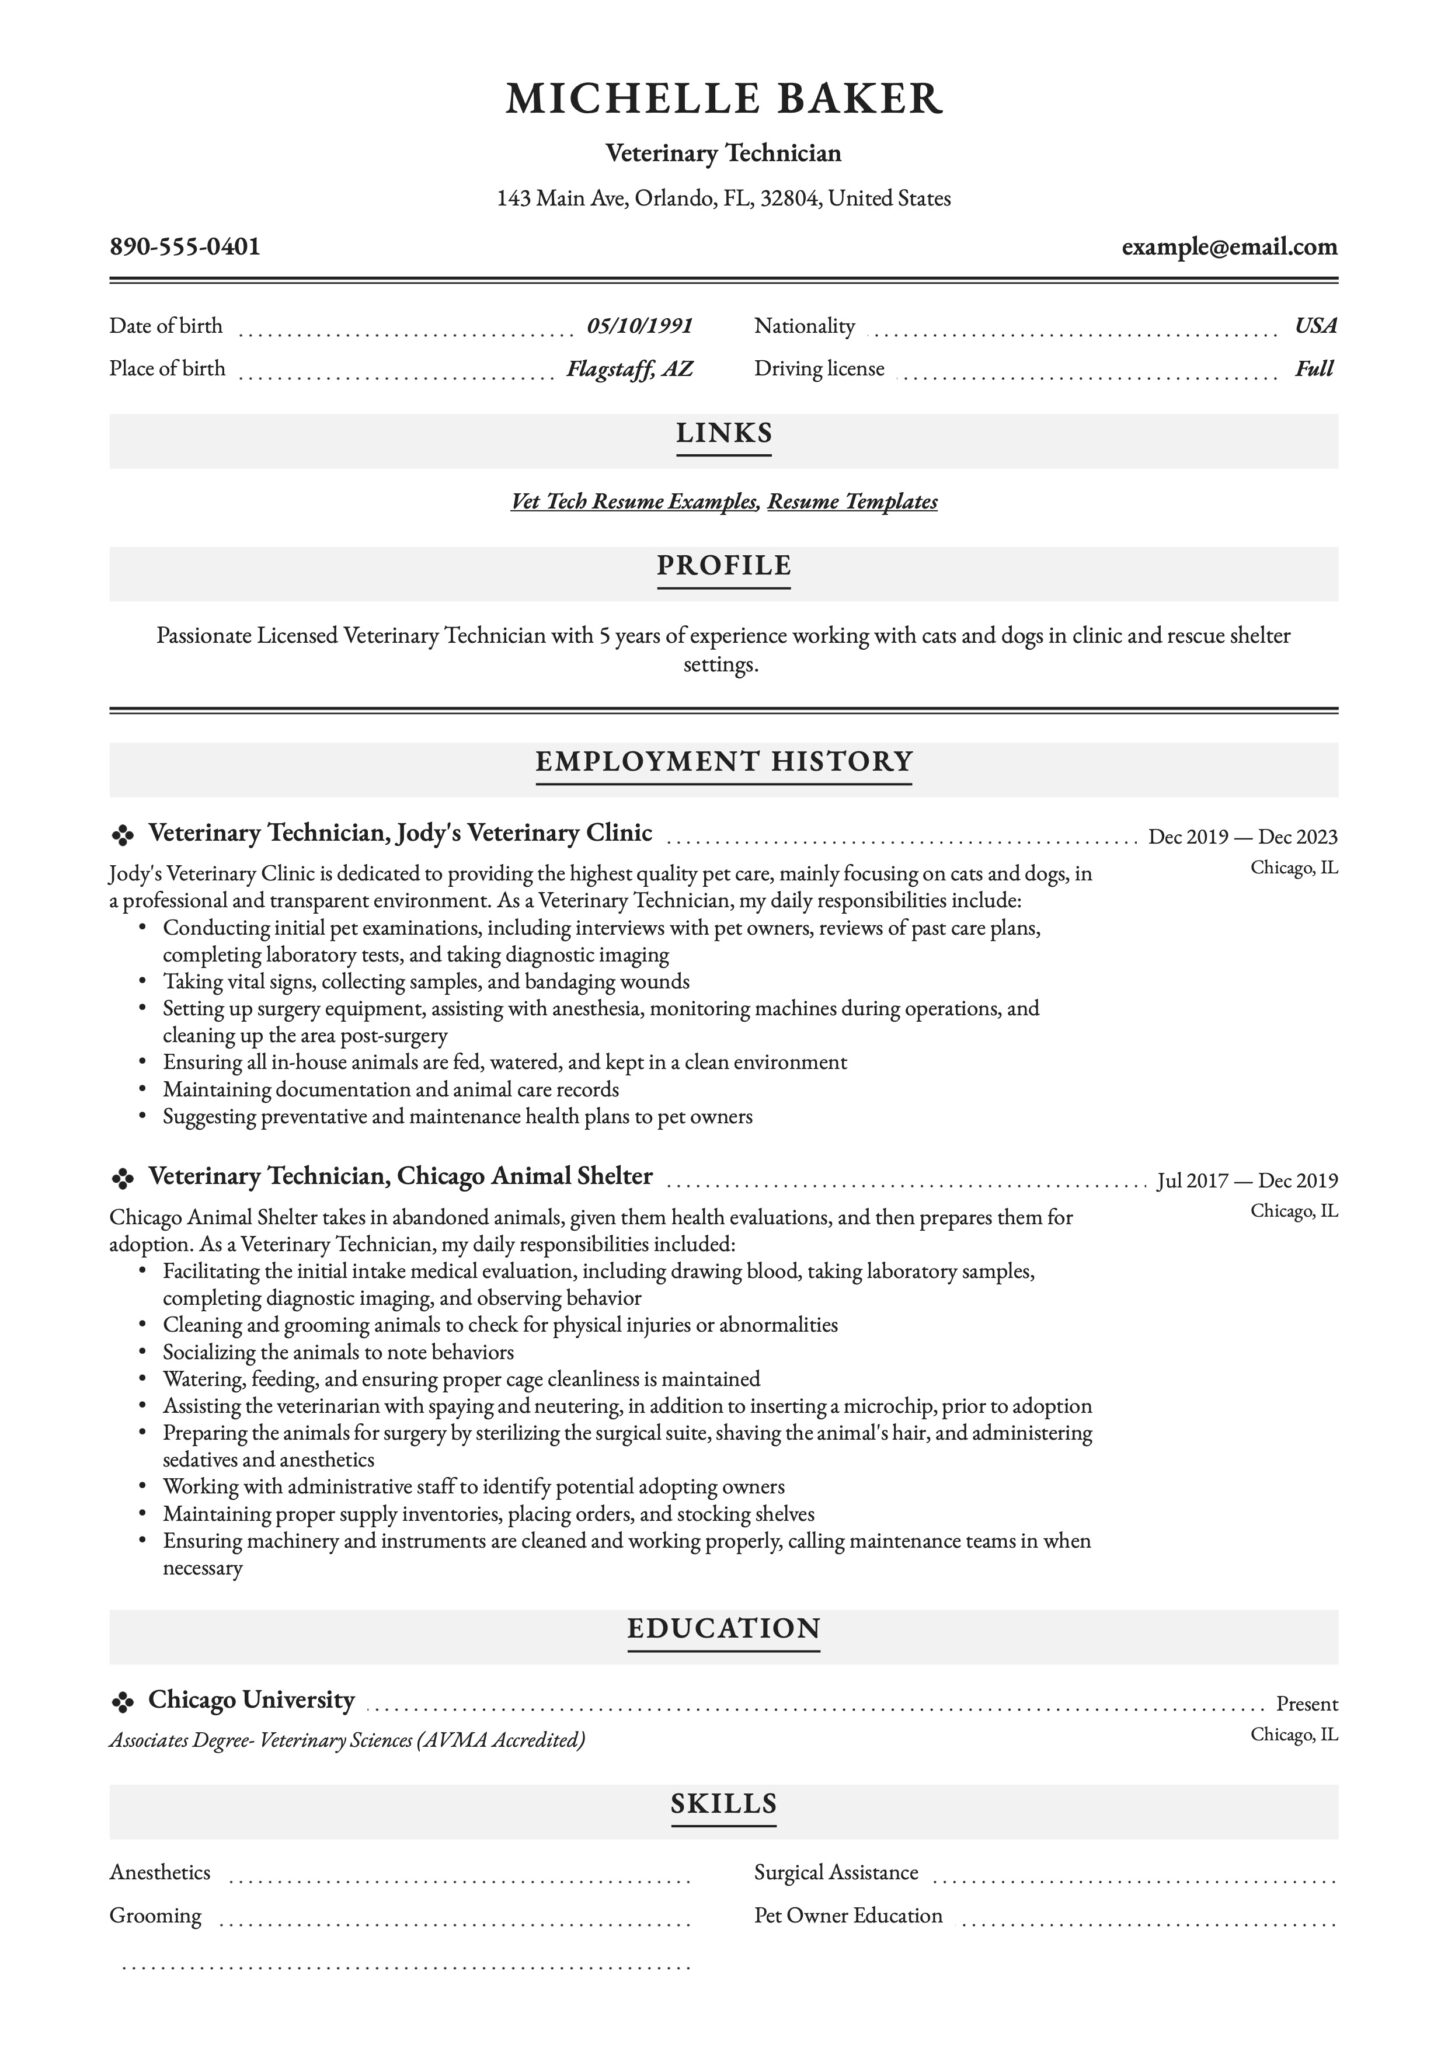 Professional Vet Tech Resume